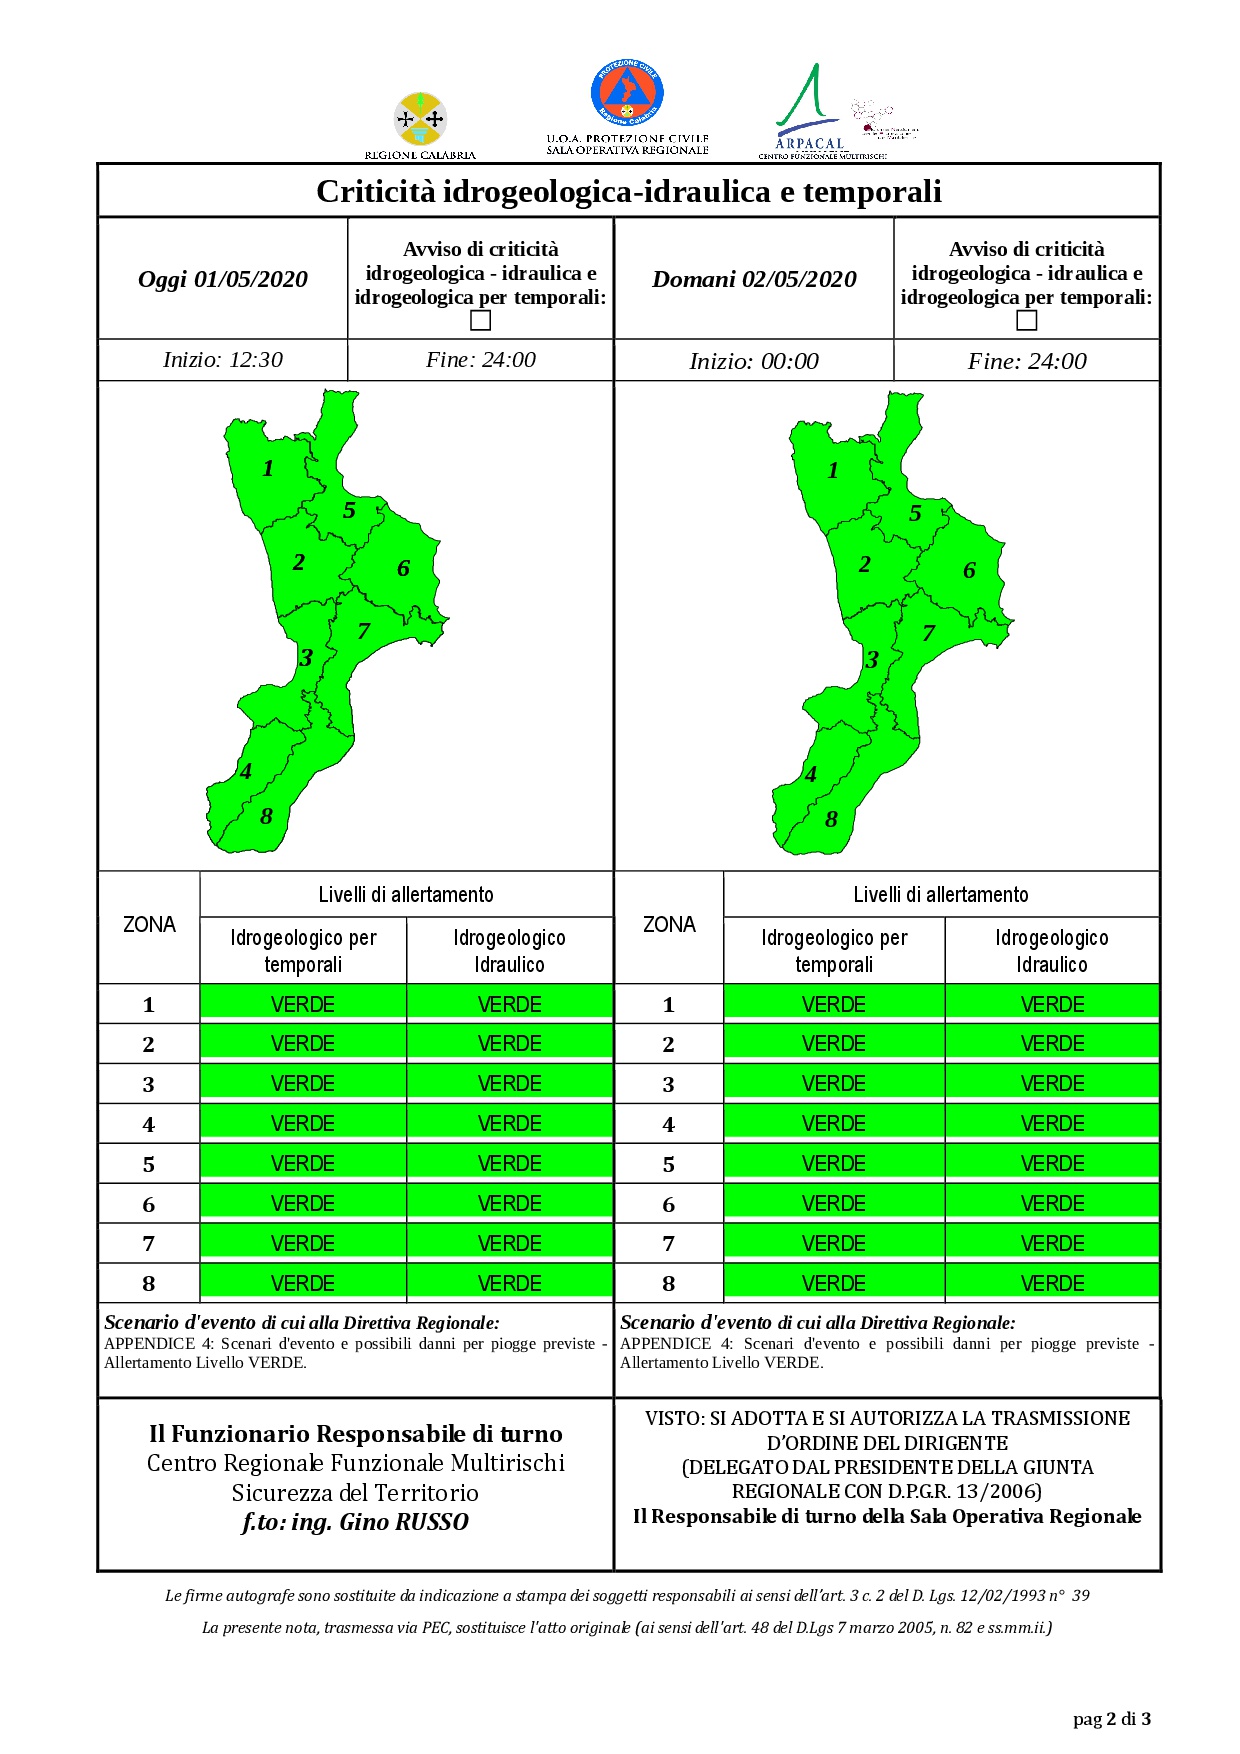 Criticità idrogeologica-idraulica e temporali in Calabria 01-05-2020